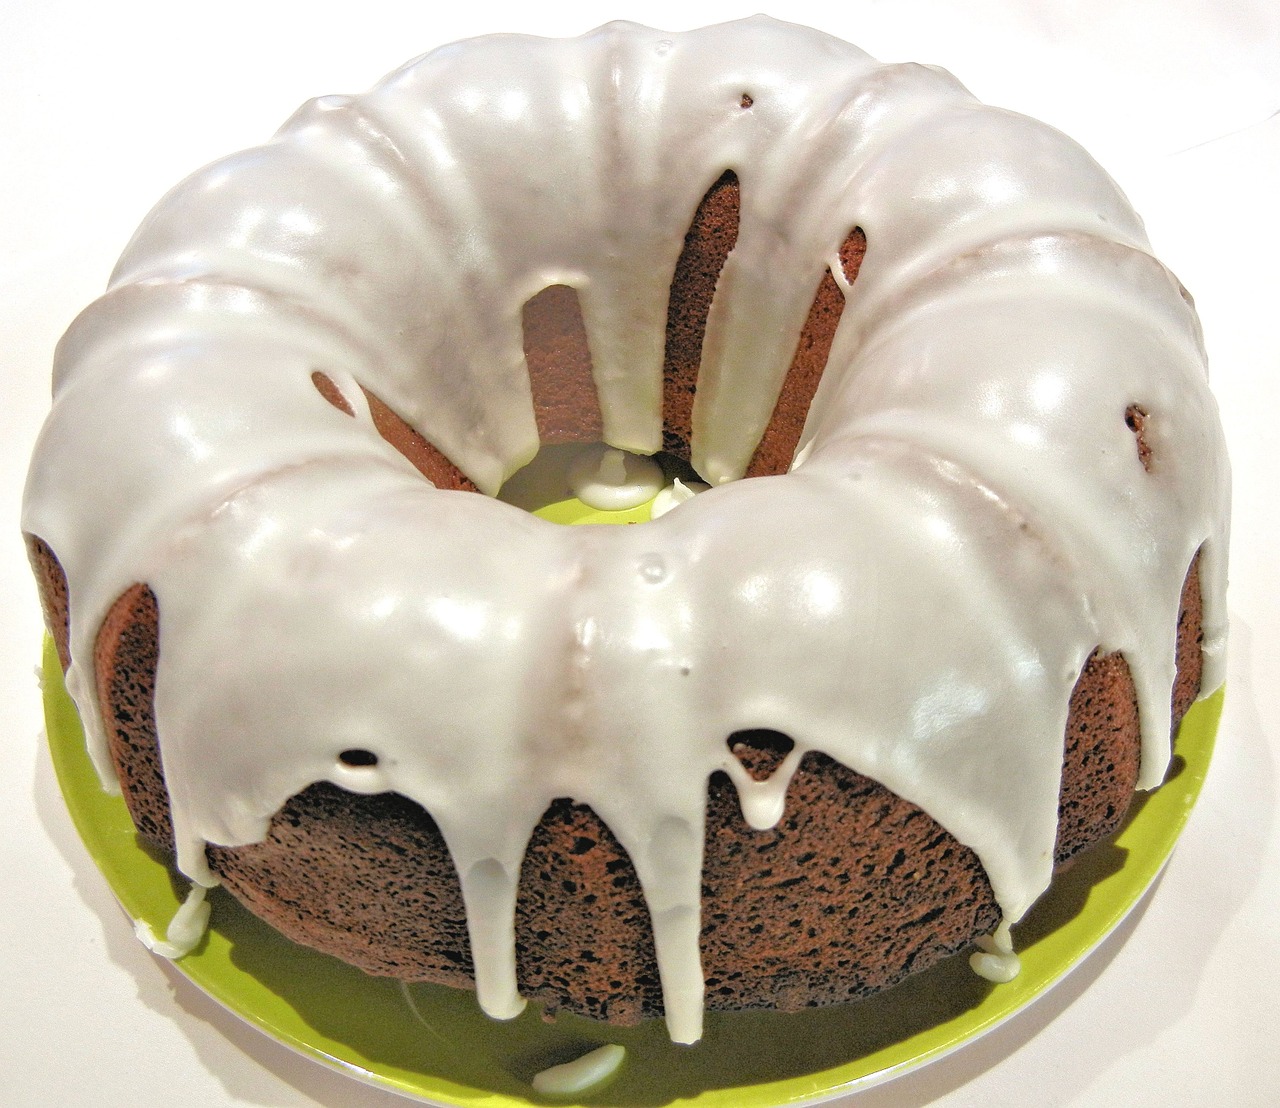 chocolate bundt cake confectioner sugar baked free photo